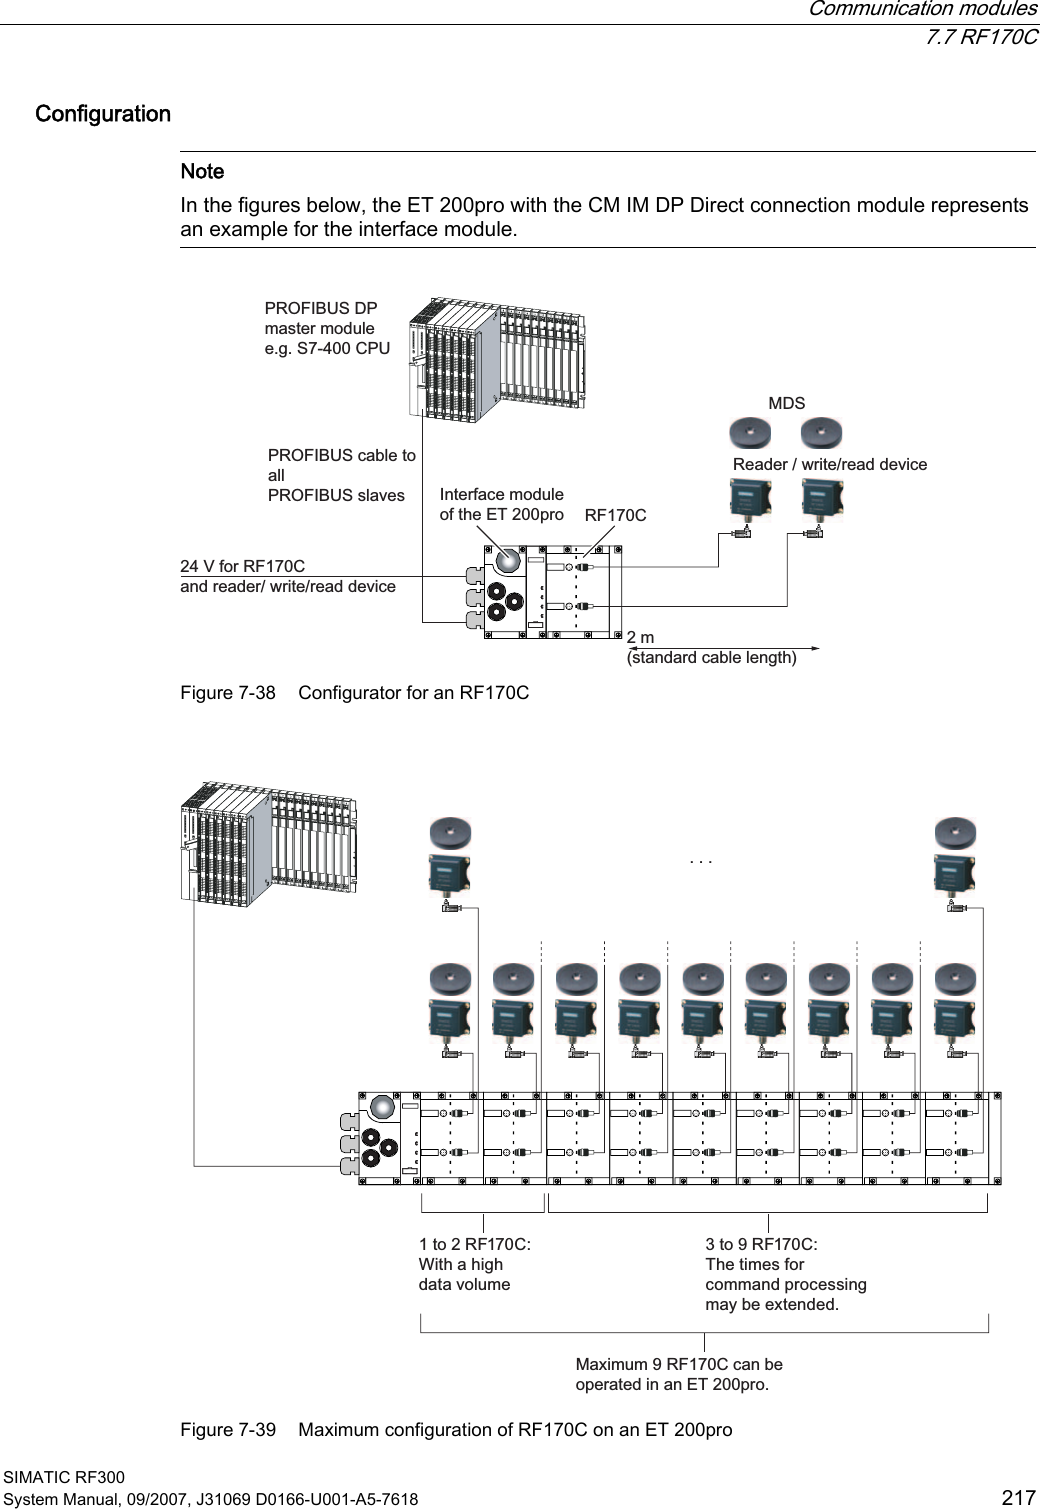  Communication modules  7.7 RF170C SIMATIC RF300 System Manual, 09/2007, J31069 D0166-U001-A5-7618  217      Configuration   Note In the figures below, the ET 200pro with the CM IM DP Direct connection module represents an example for the interface module.   352),%86&apos;3PDVWHUPRGXOHHJ6&amp;38PVWDQGDUGFDEOHOHQJWK352),%86FDEOHWRDOO352),%86VODYHV9IRU5)&amp;DQGUHDGHUZULWHUHDGGHYLFH,QWHUIDFHPRGXOHRIWKH(7SUR5HDGHUZULWHUHDGGHYLFH0&apos;65)&amp; Figure 7-38  Configurator for an RF170C  WR5)&amp;:LWKDKLJKGDWDYROXPHWR5)&amp;7KHWLPHVIRUFRPPDQGSURFHVVLQJPD\EHH[WHQGHG0D[LPXP5)&amp;FDQEHRSHUDWHGLQDQ(7SUR Figure 7-39  Maximum configuration of RF170C on an ET 200pro 